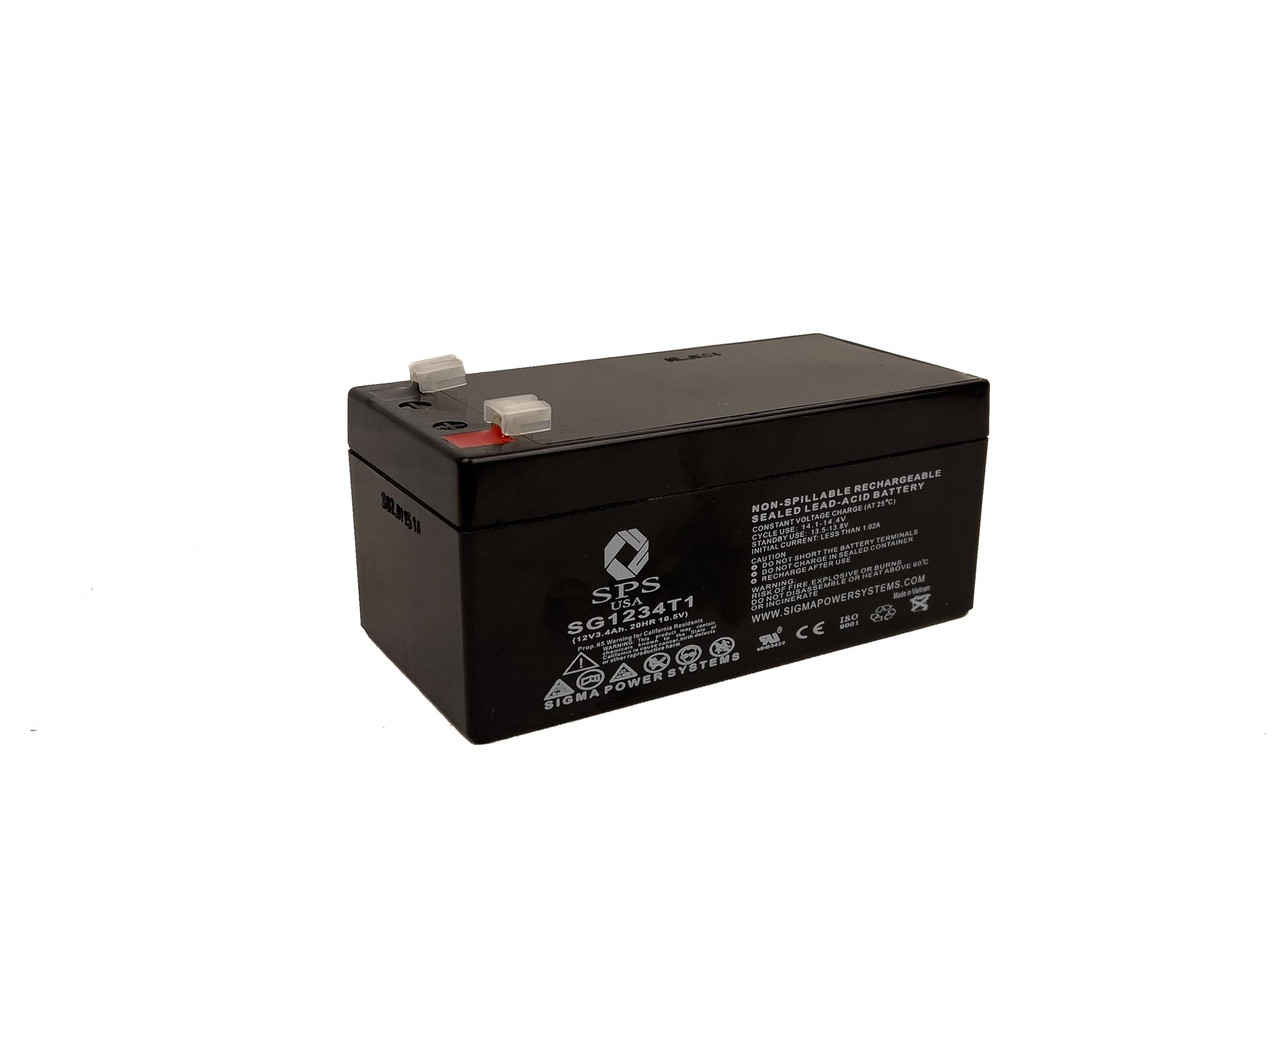 Raion Power 12V 3.4Ah Non-Spillable Replacement Battery for Black & Decker CST1200 10" Cordless Trimmer / Edger